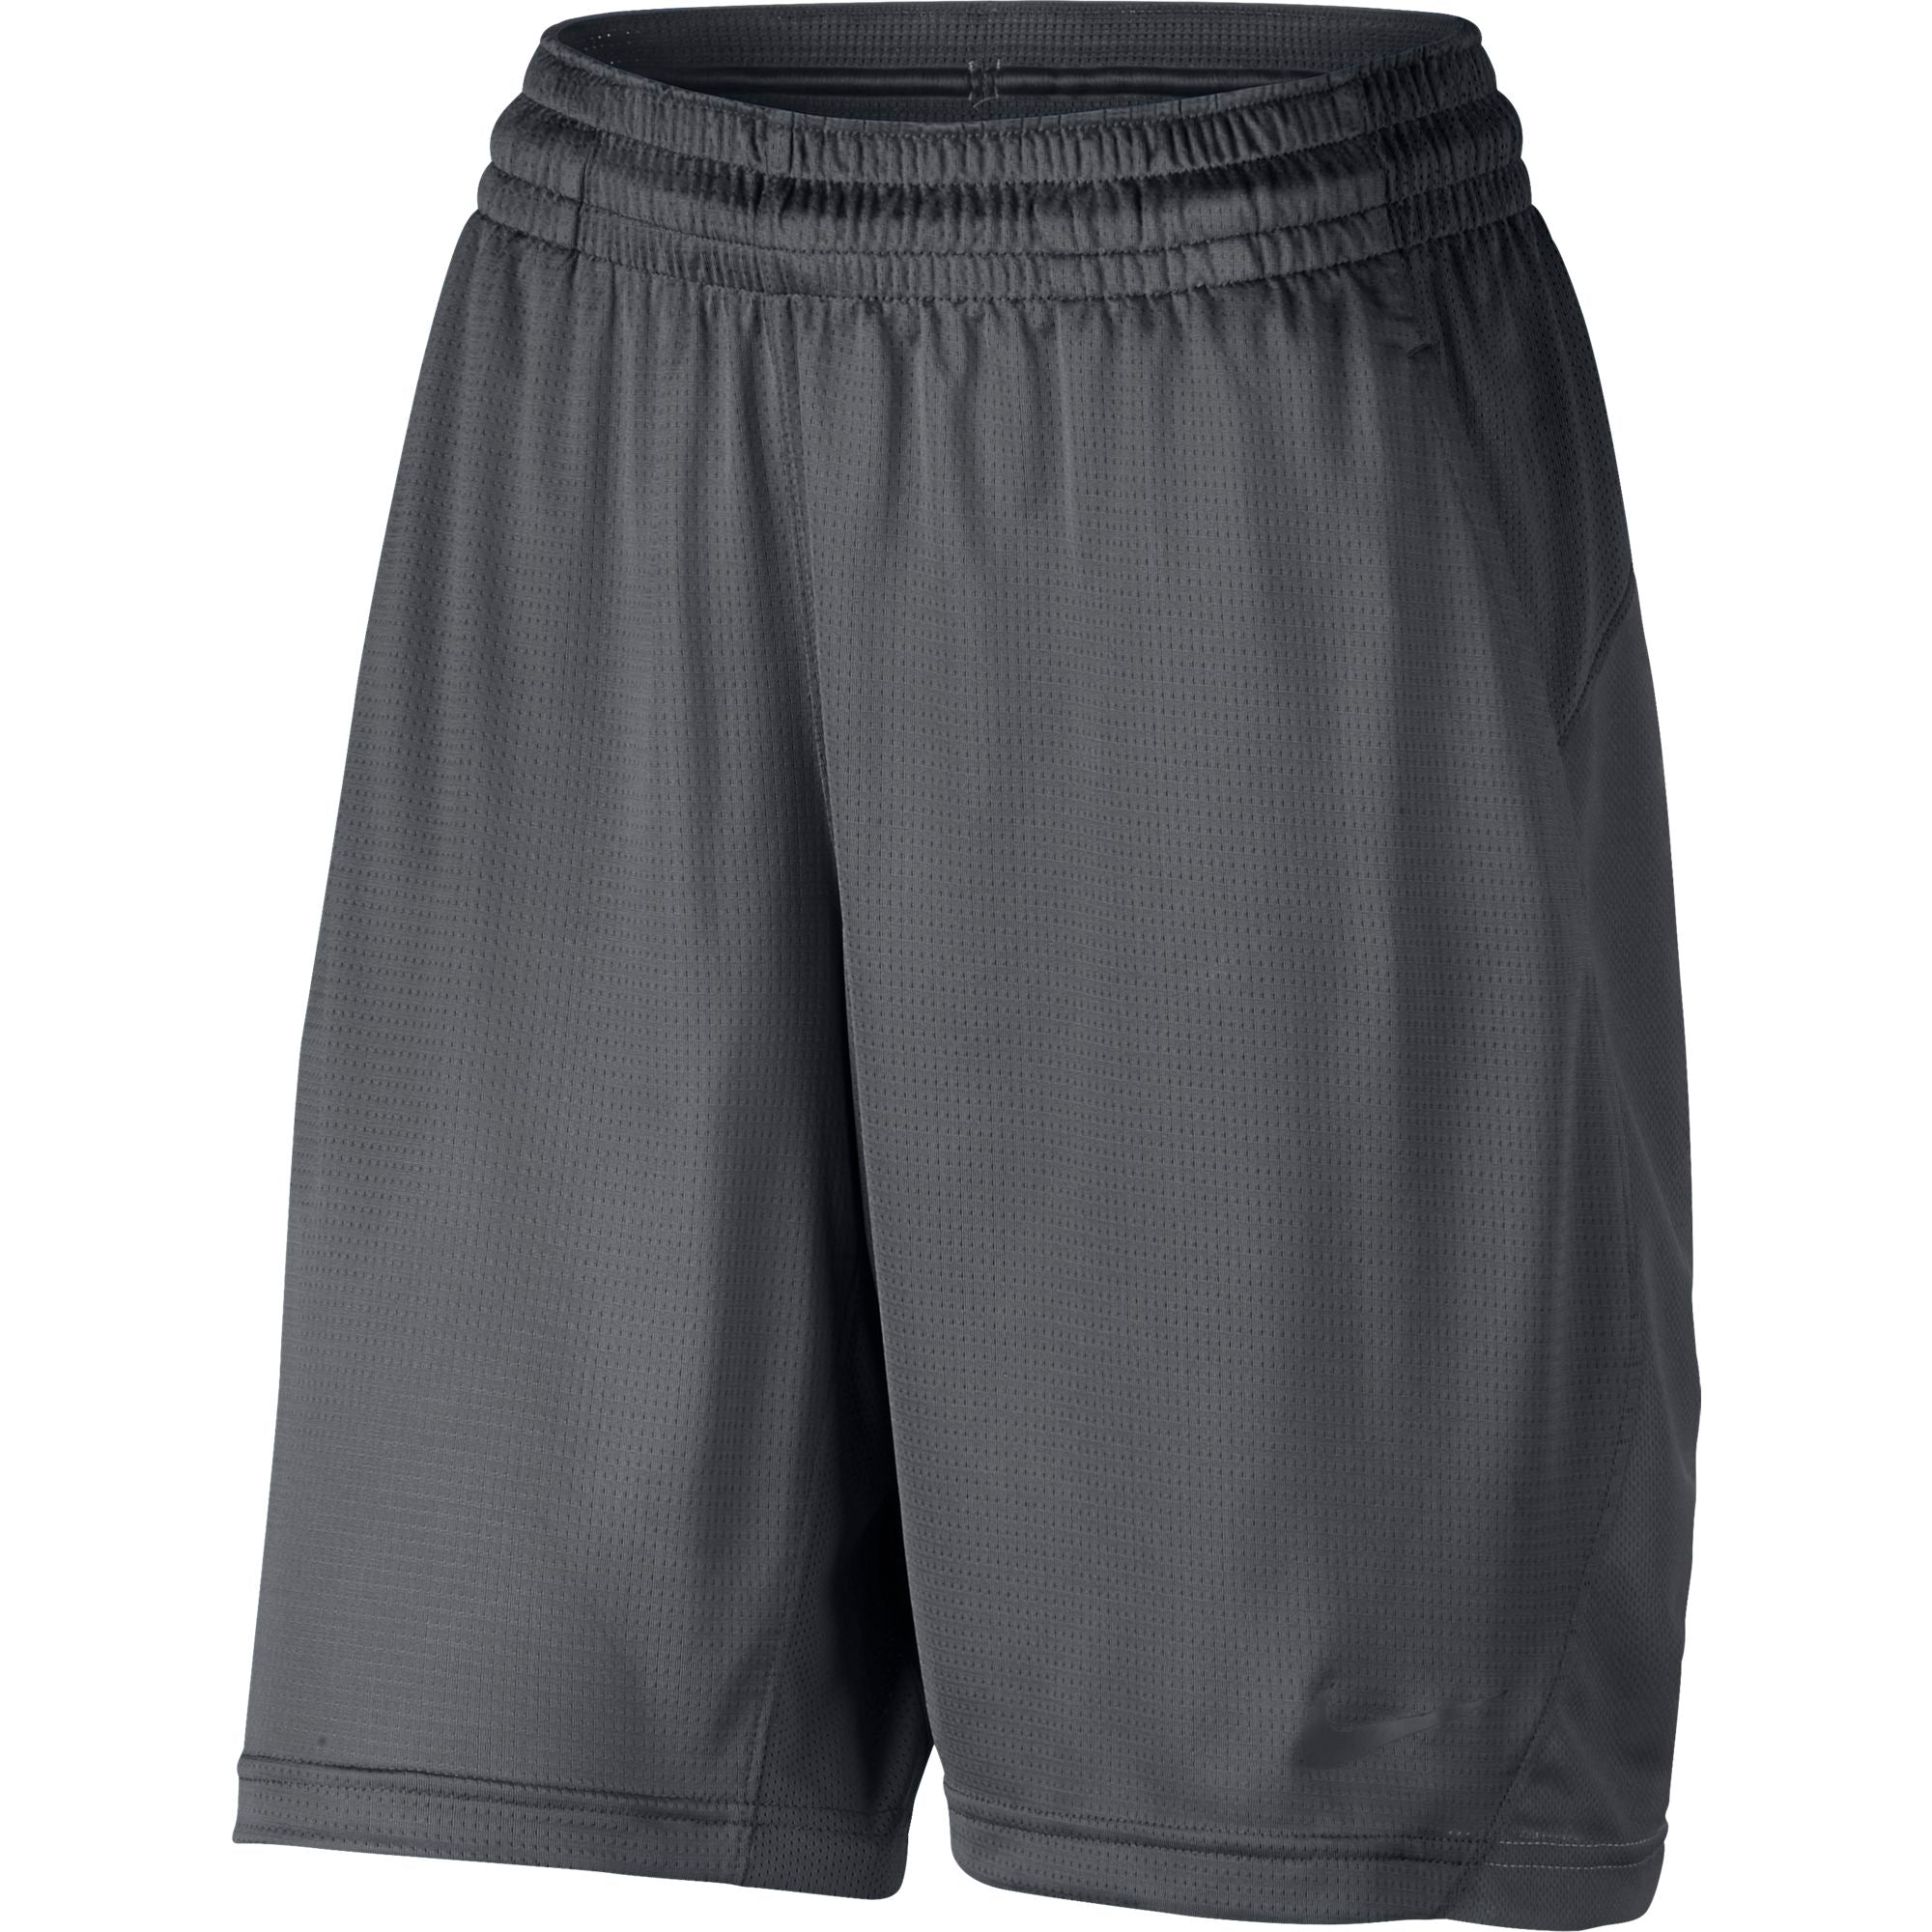 Nike Womens Basketball Shorts - Dark Grey/Anthracite – SwiSh basketball